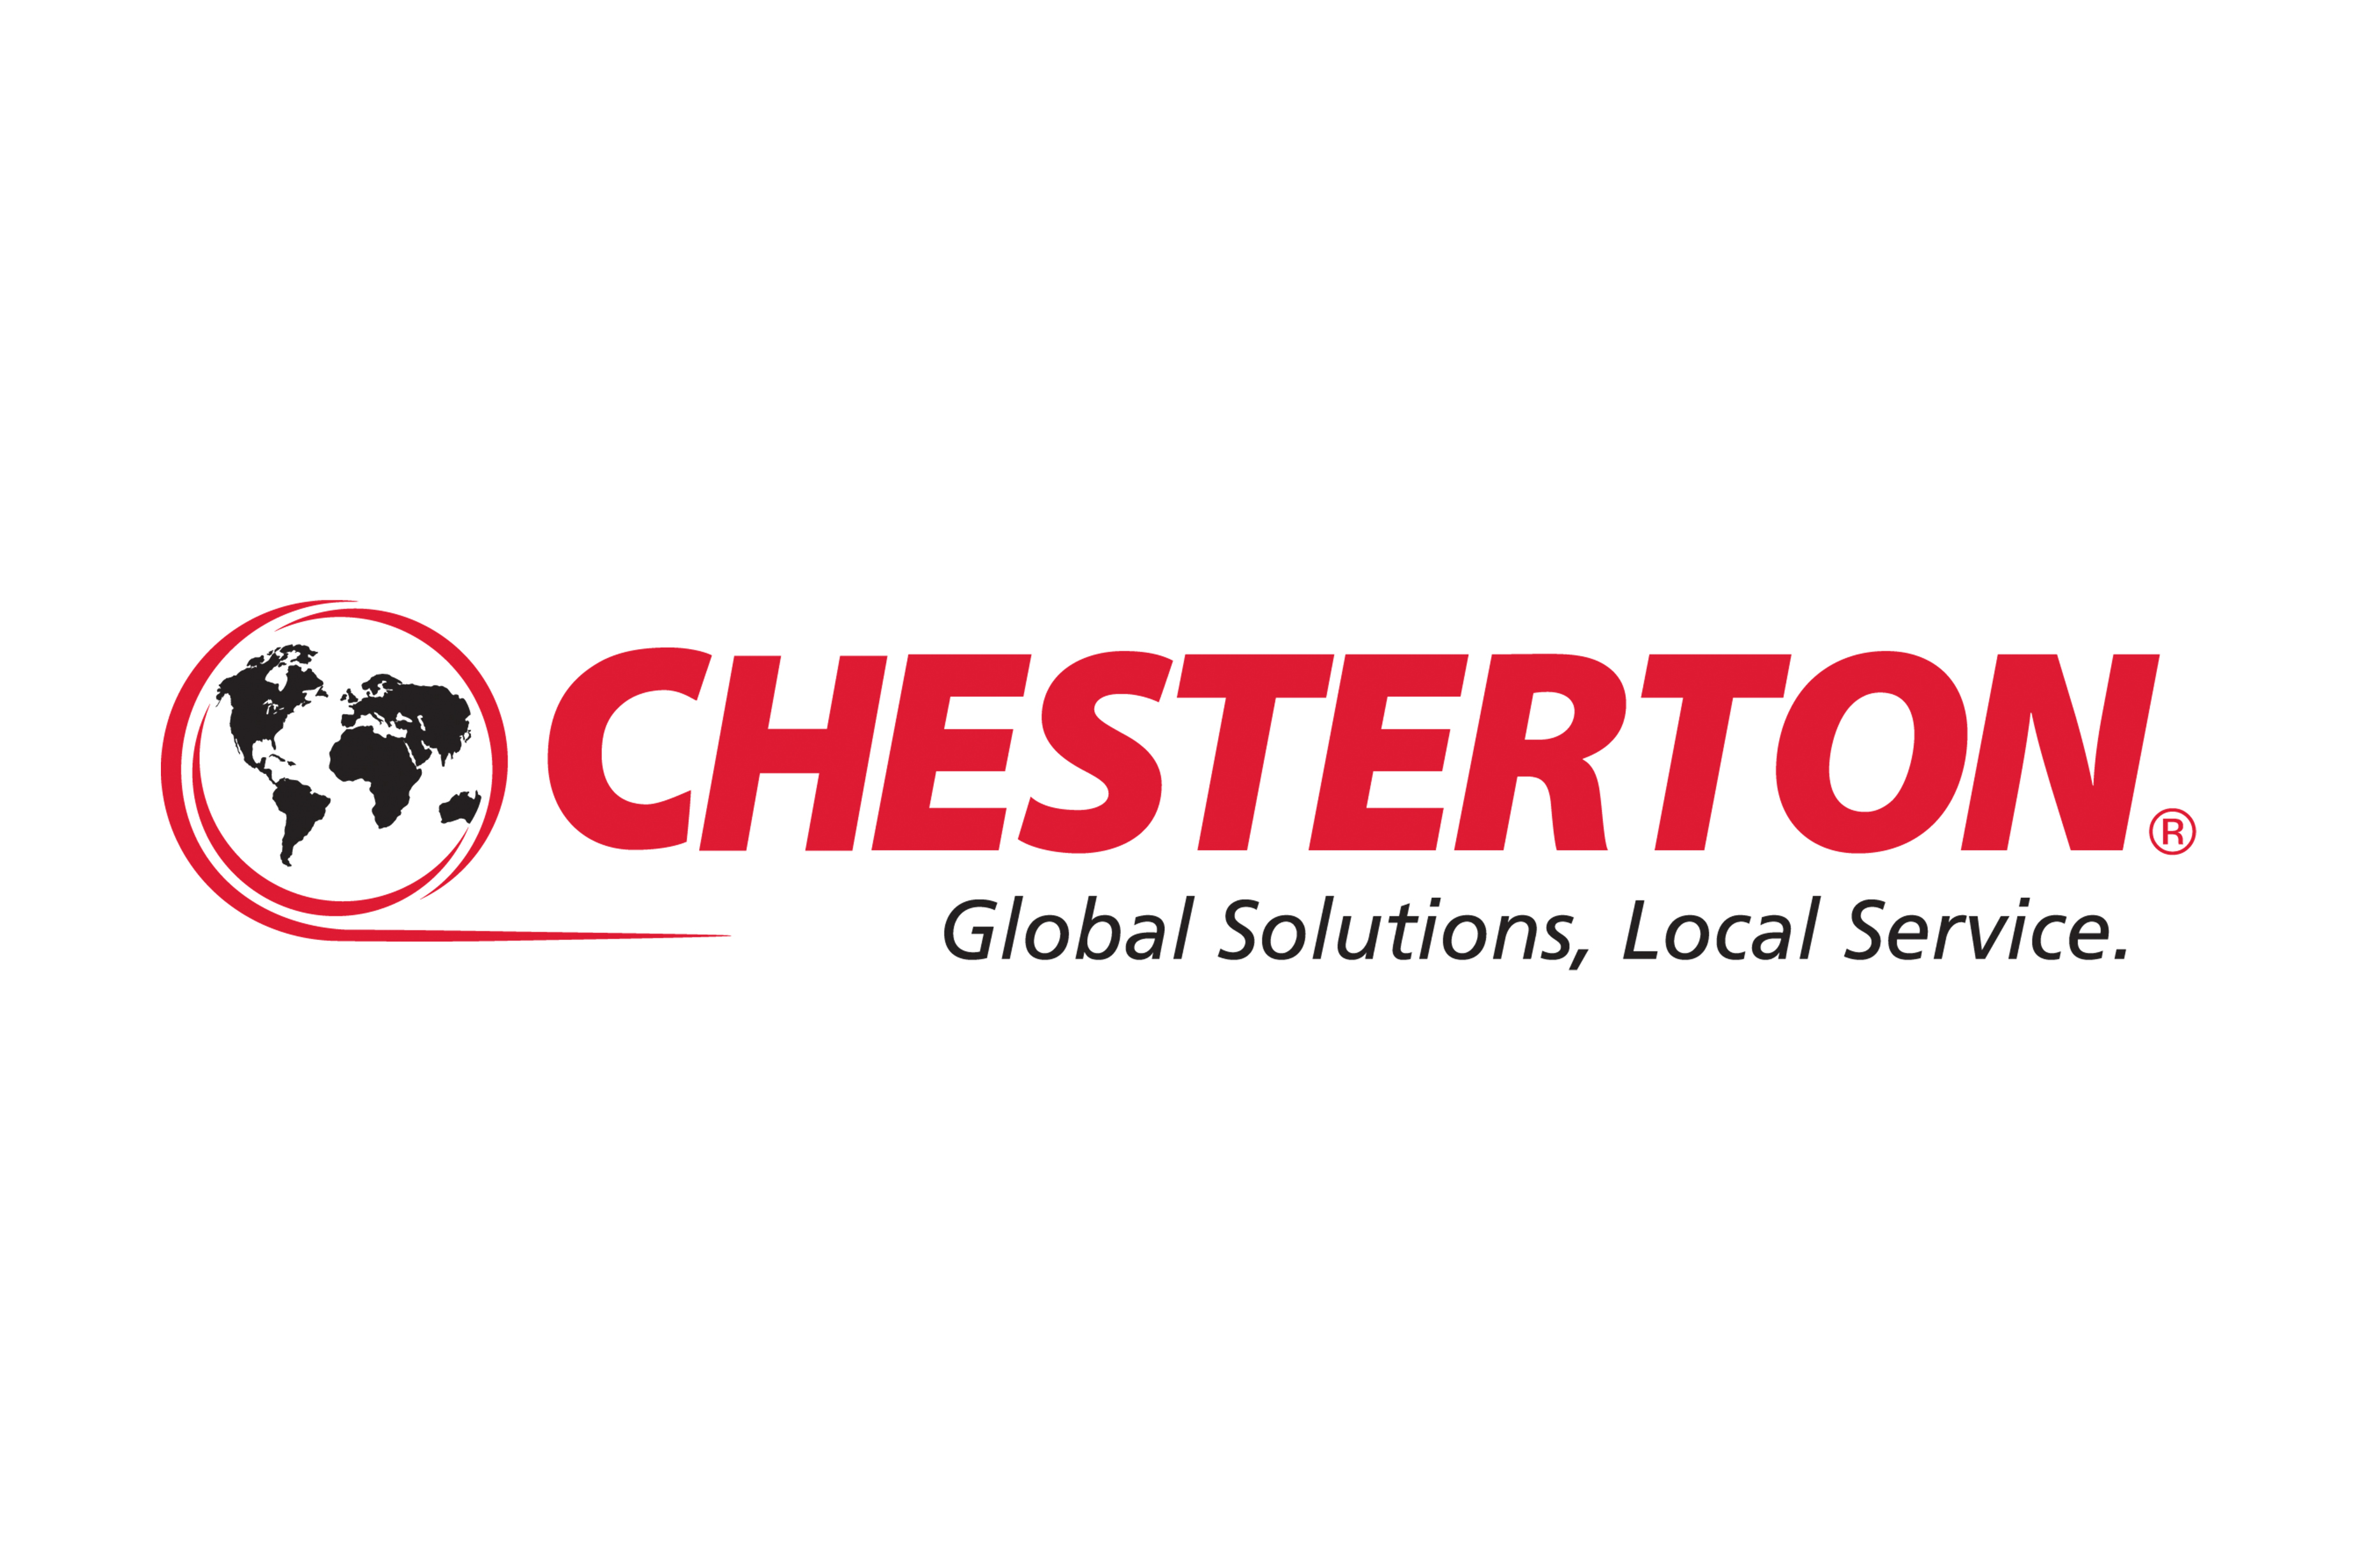 The brands CHESTERTON